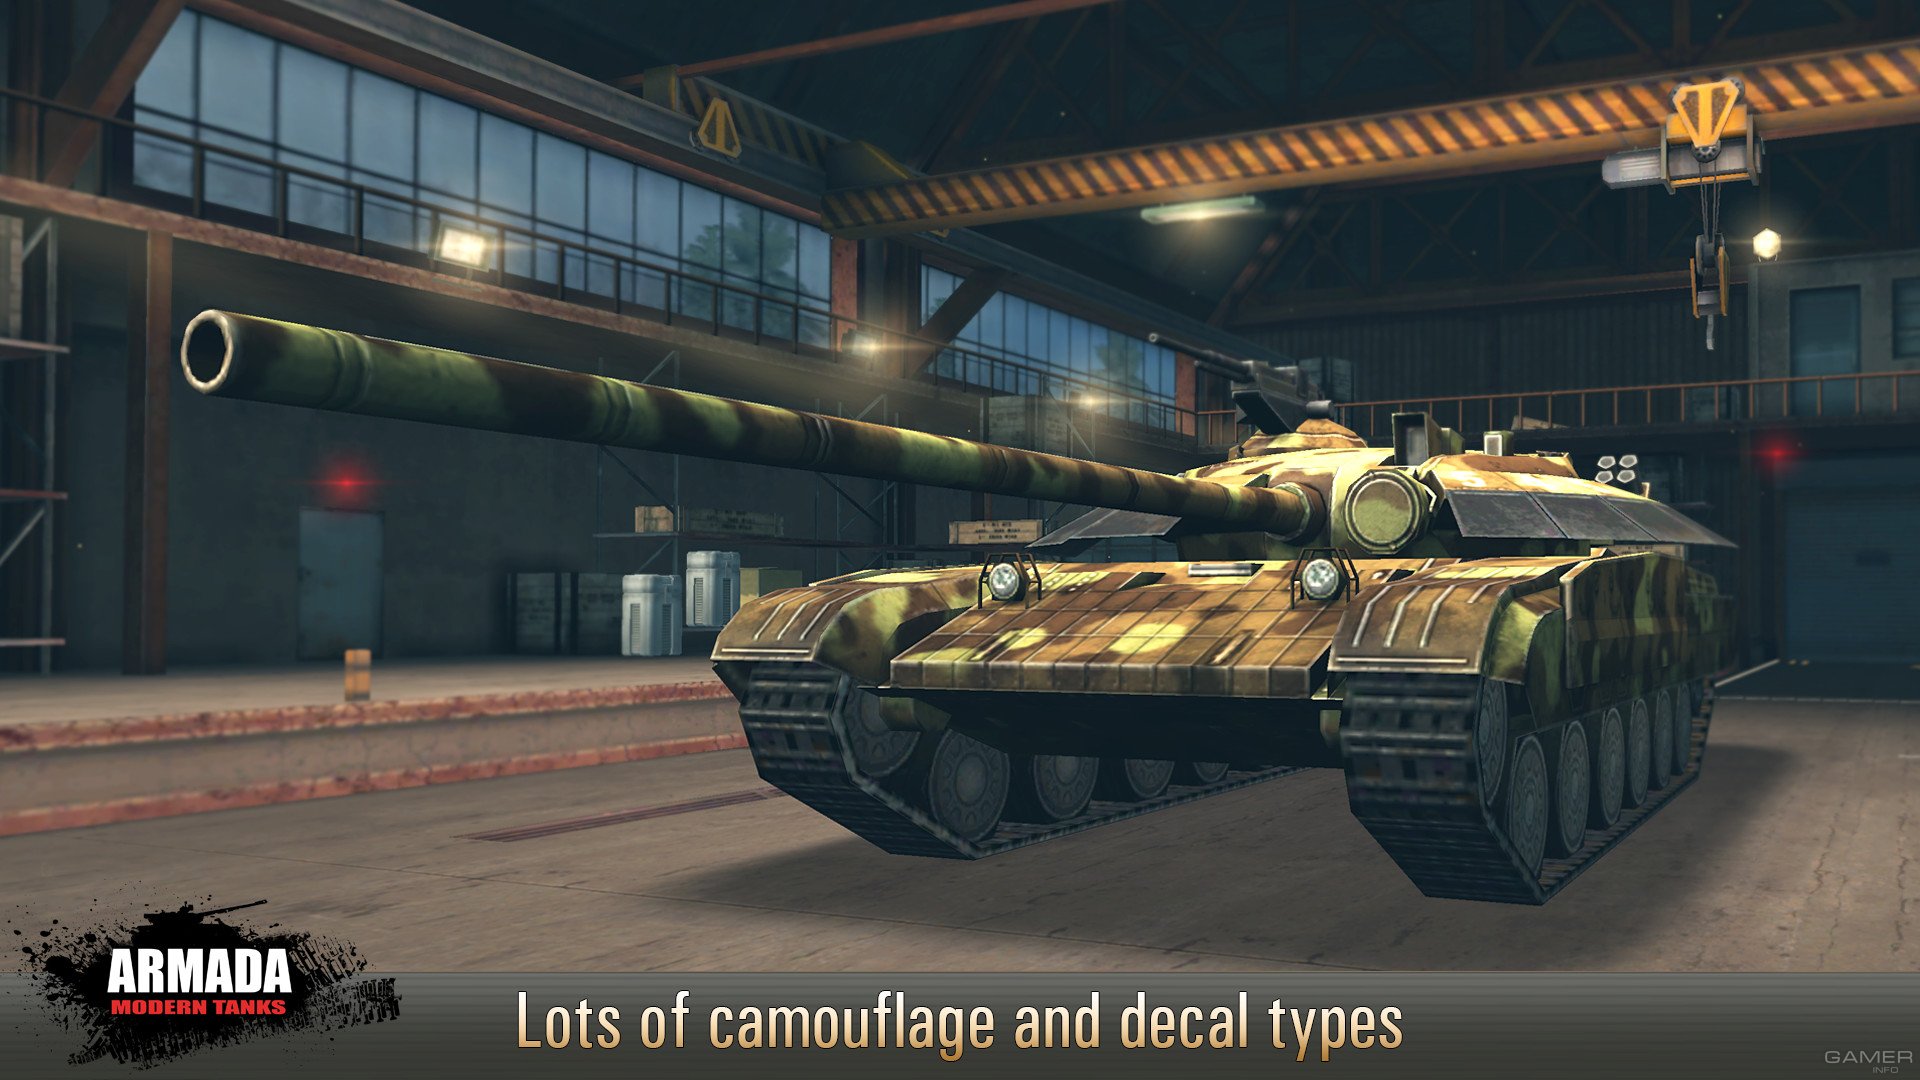 armada world of modern tanks